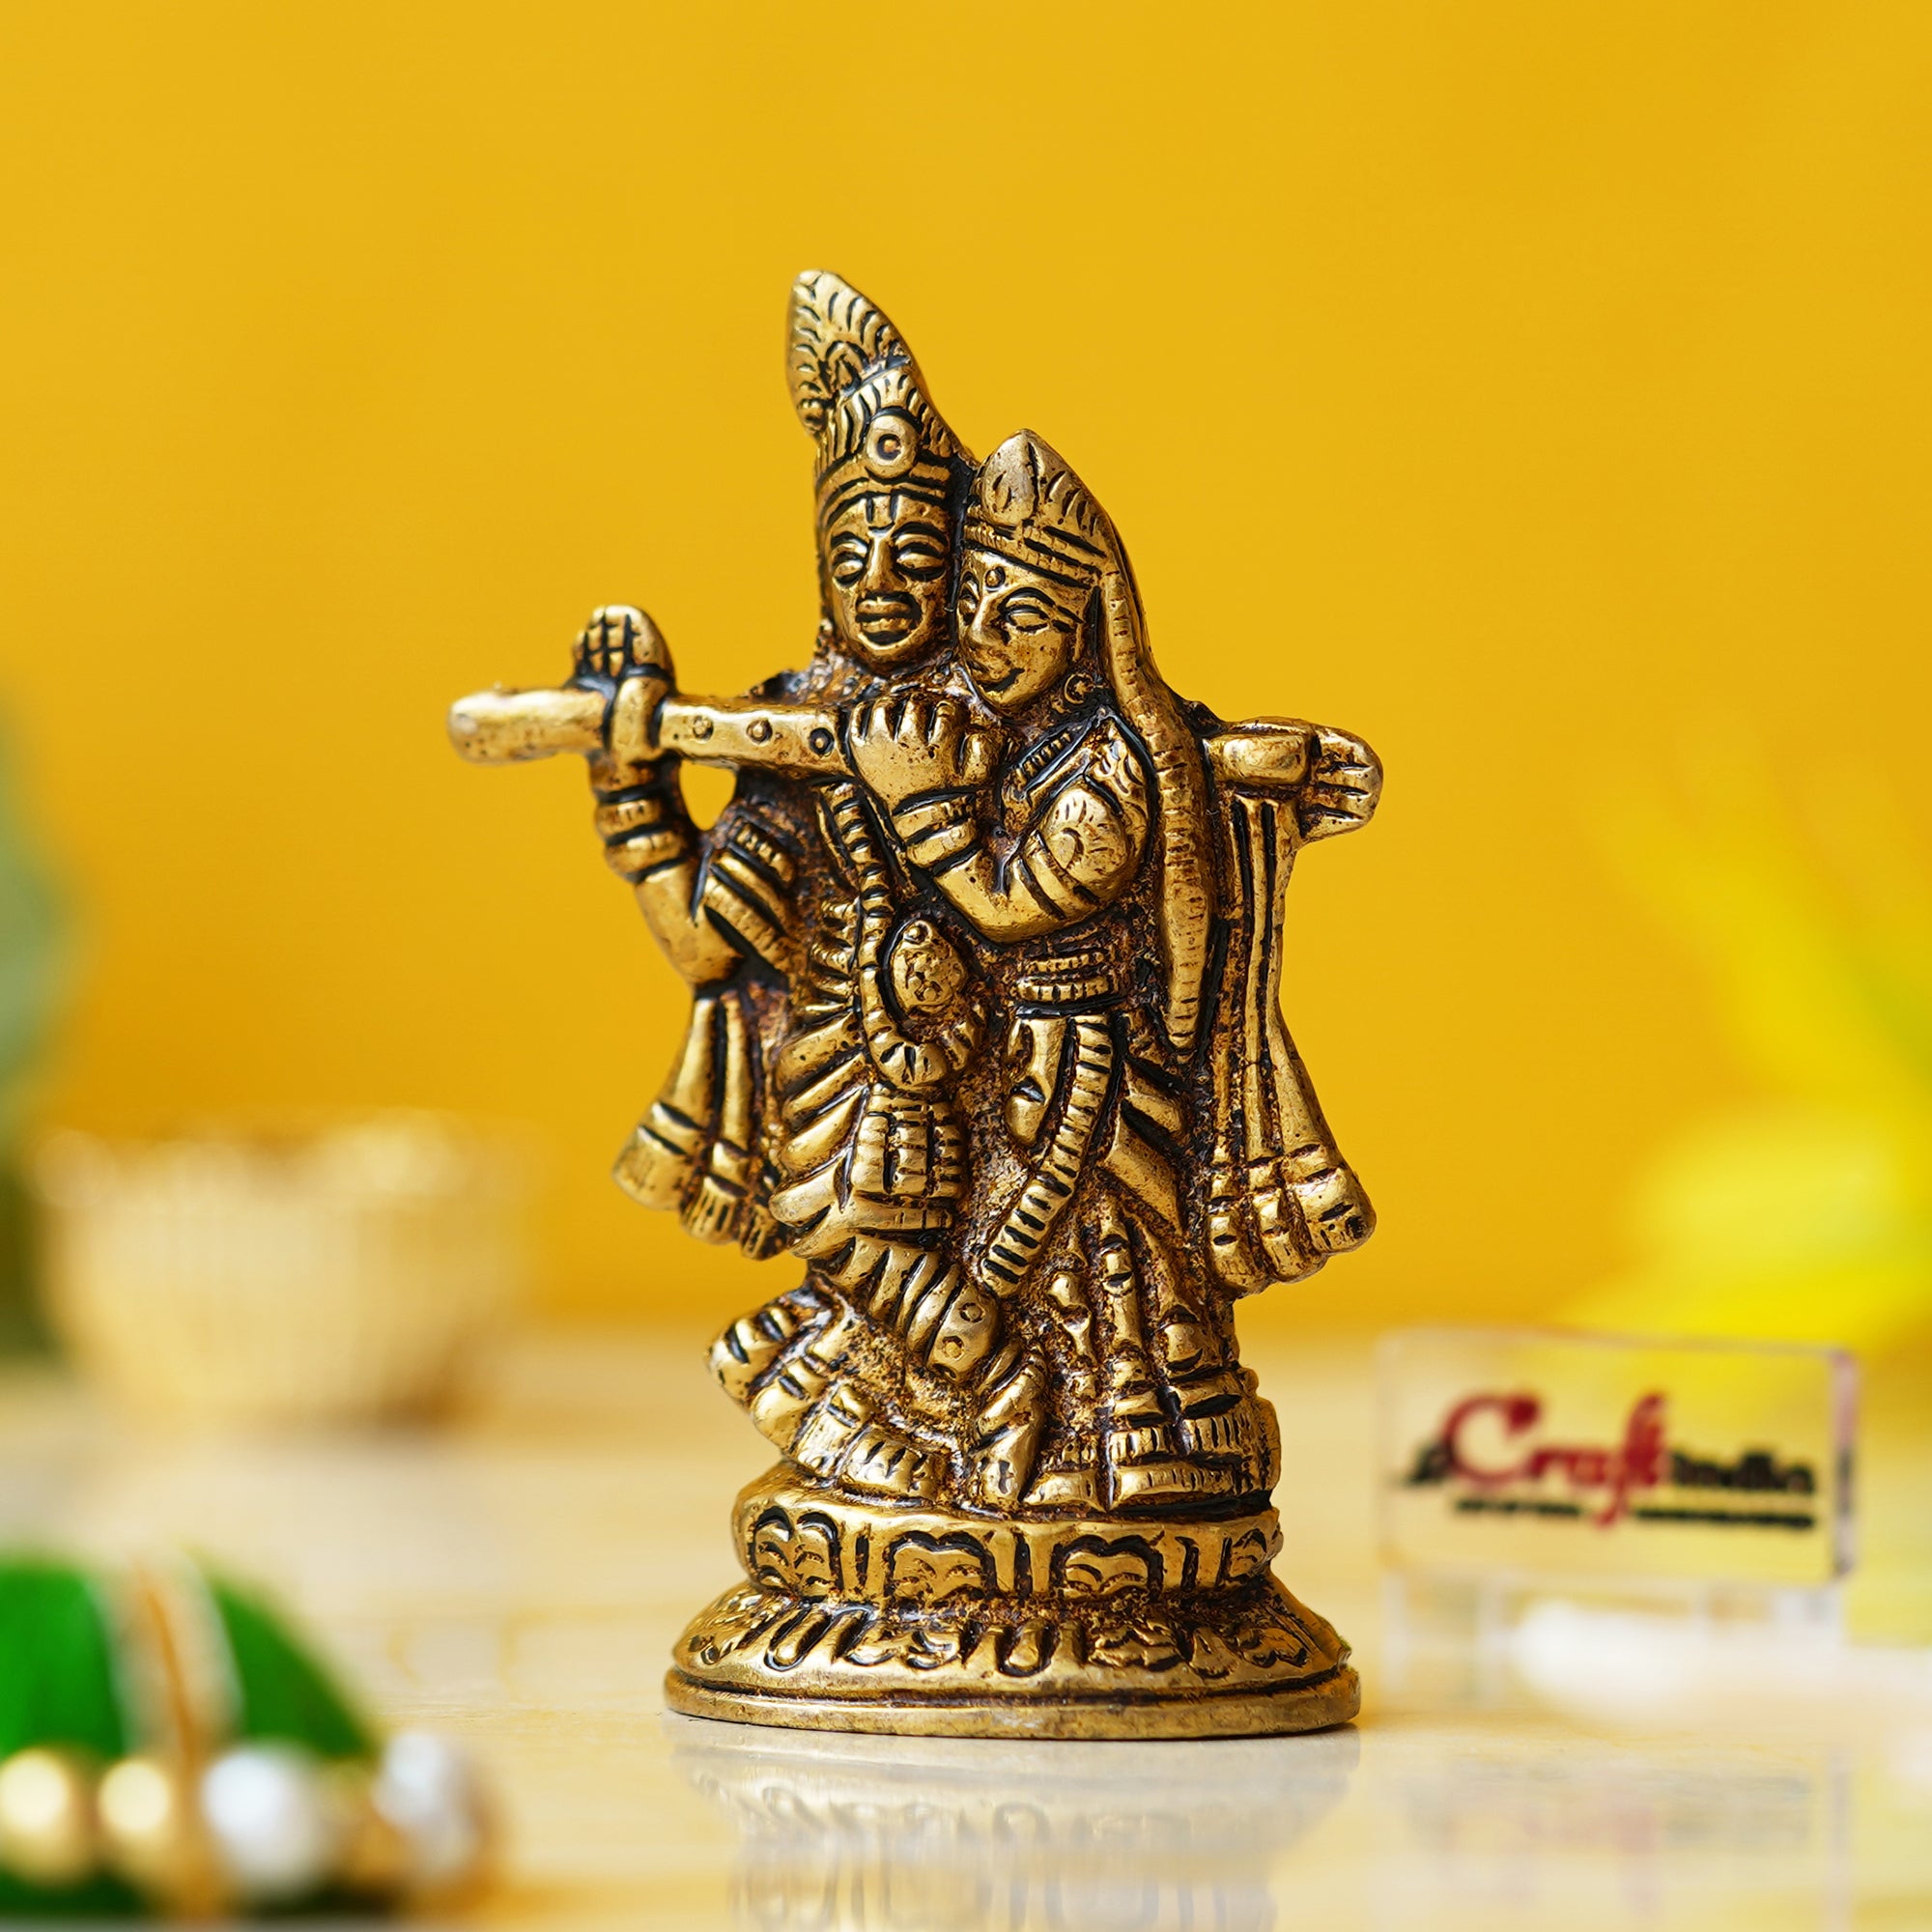 Golden Brass Radha Krishna Murti Idol - God Goddess Statue Decorative Showpiece for Home, Office, Car Dashboard - Gift for Festivals like Janmashtami, Radha Ashtami, and Diwali 1